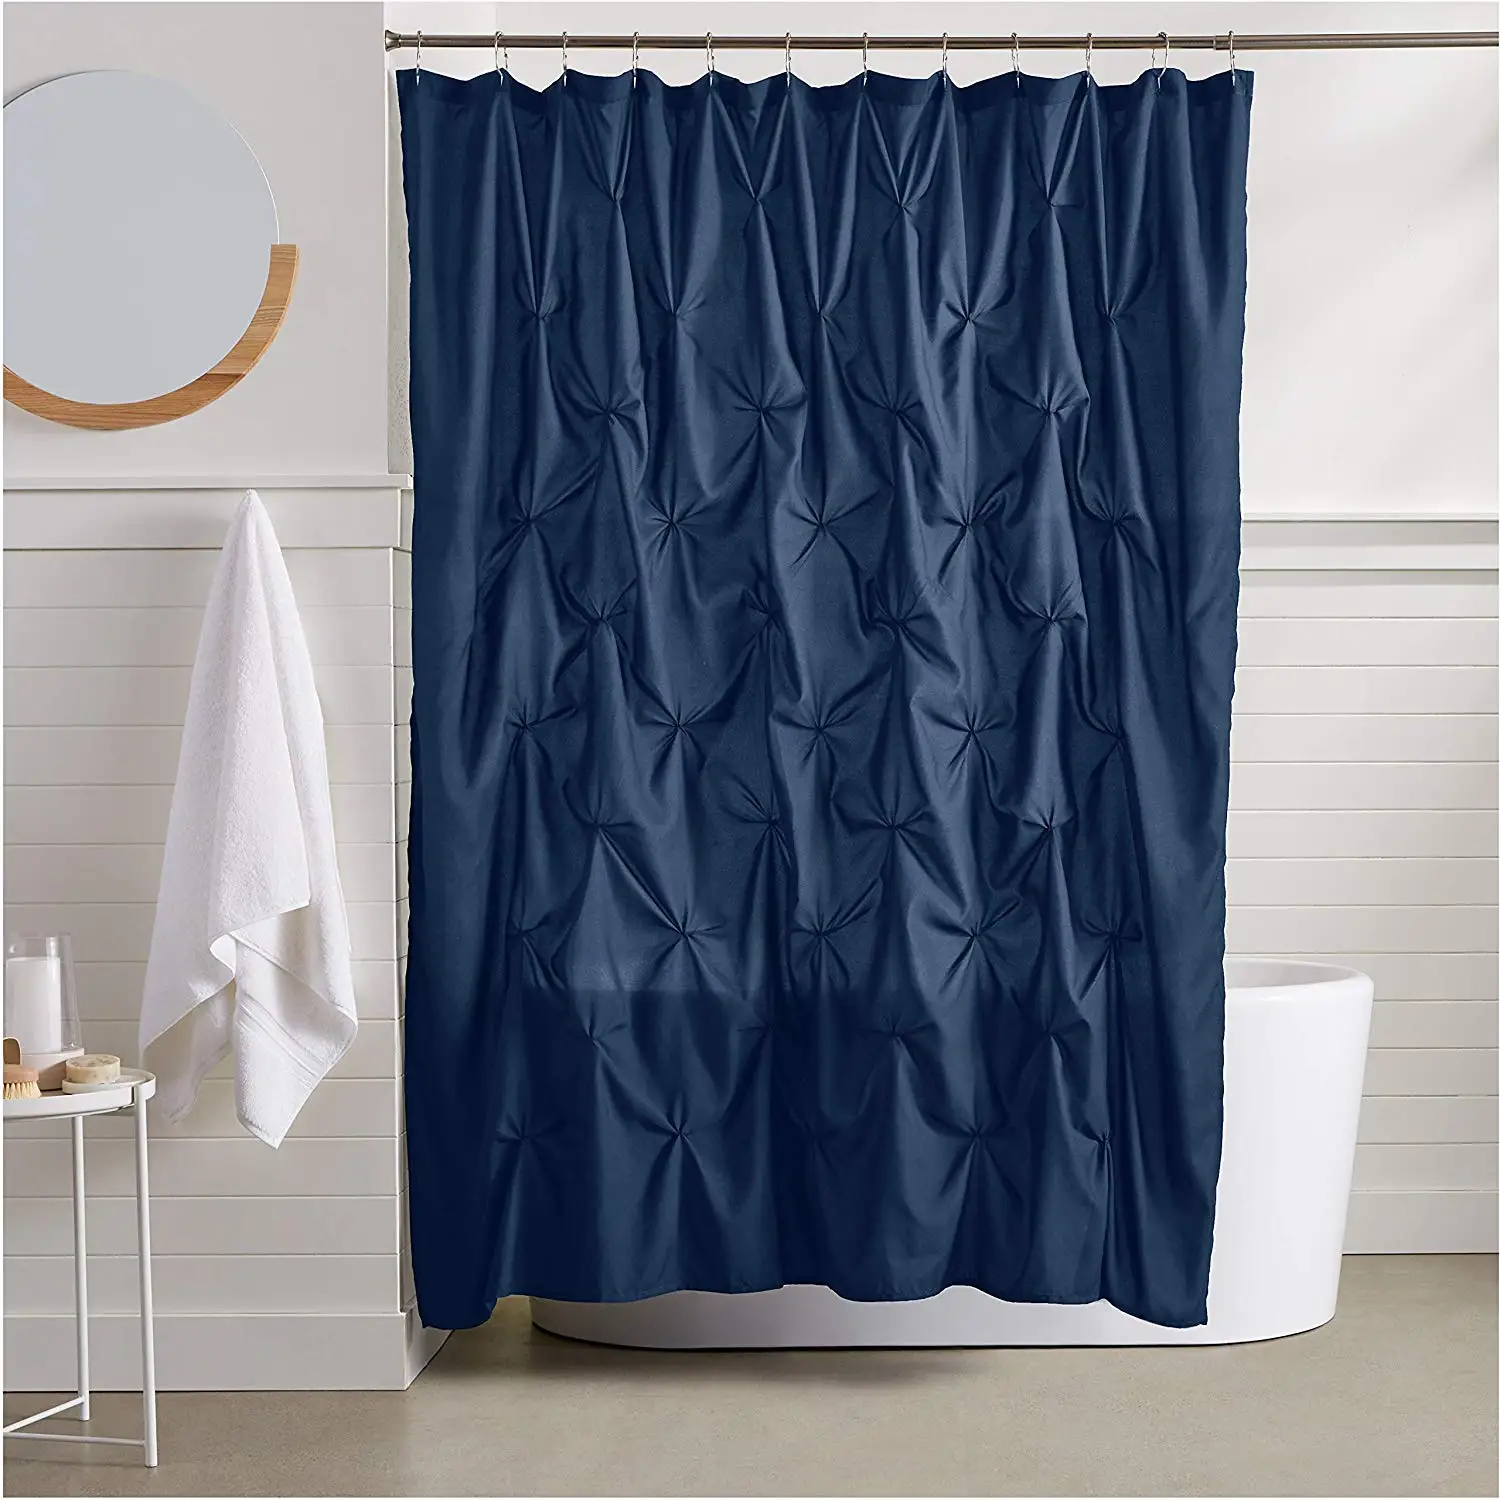 Shower curtain6.jpg